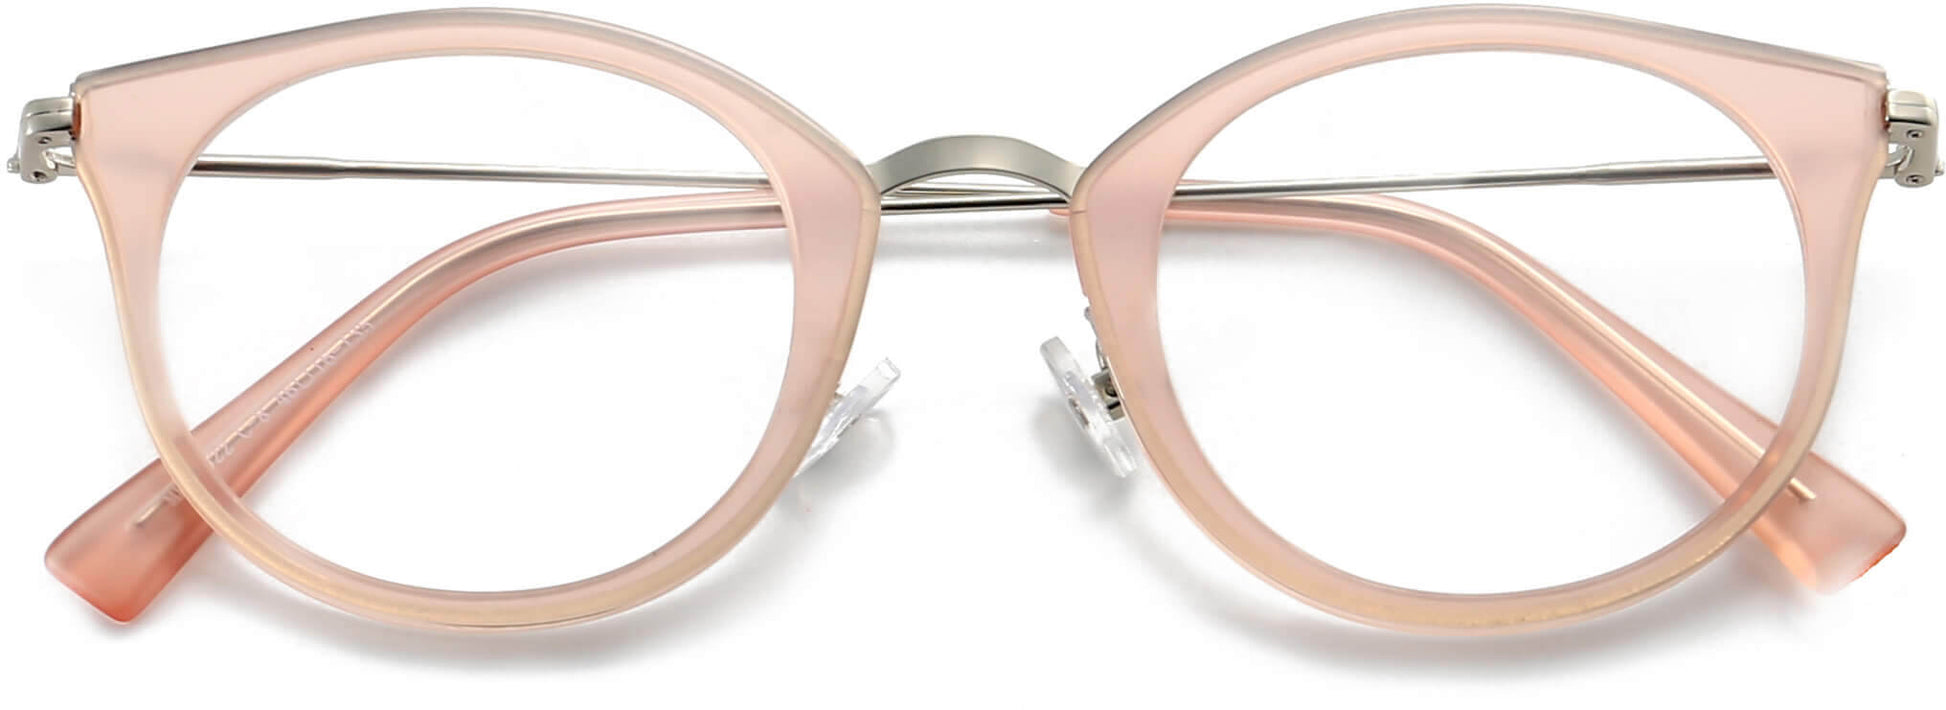 Rita Round Pink Eyeglasses from ANRRI, closed view